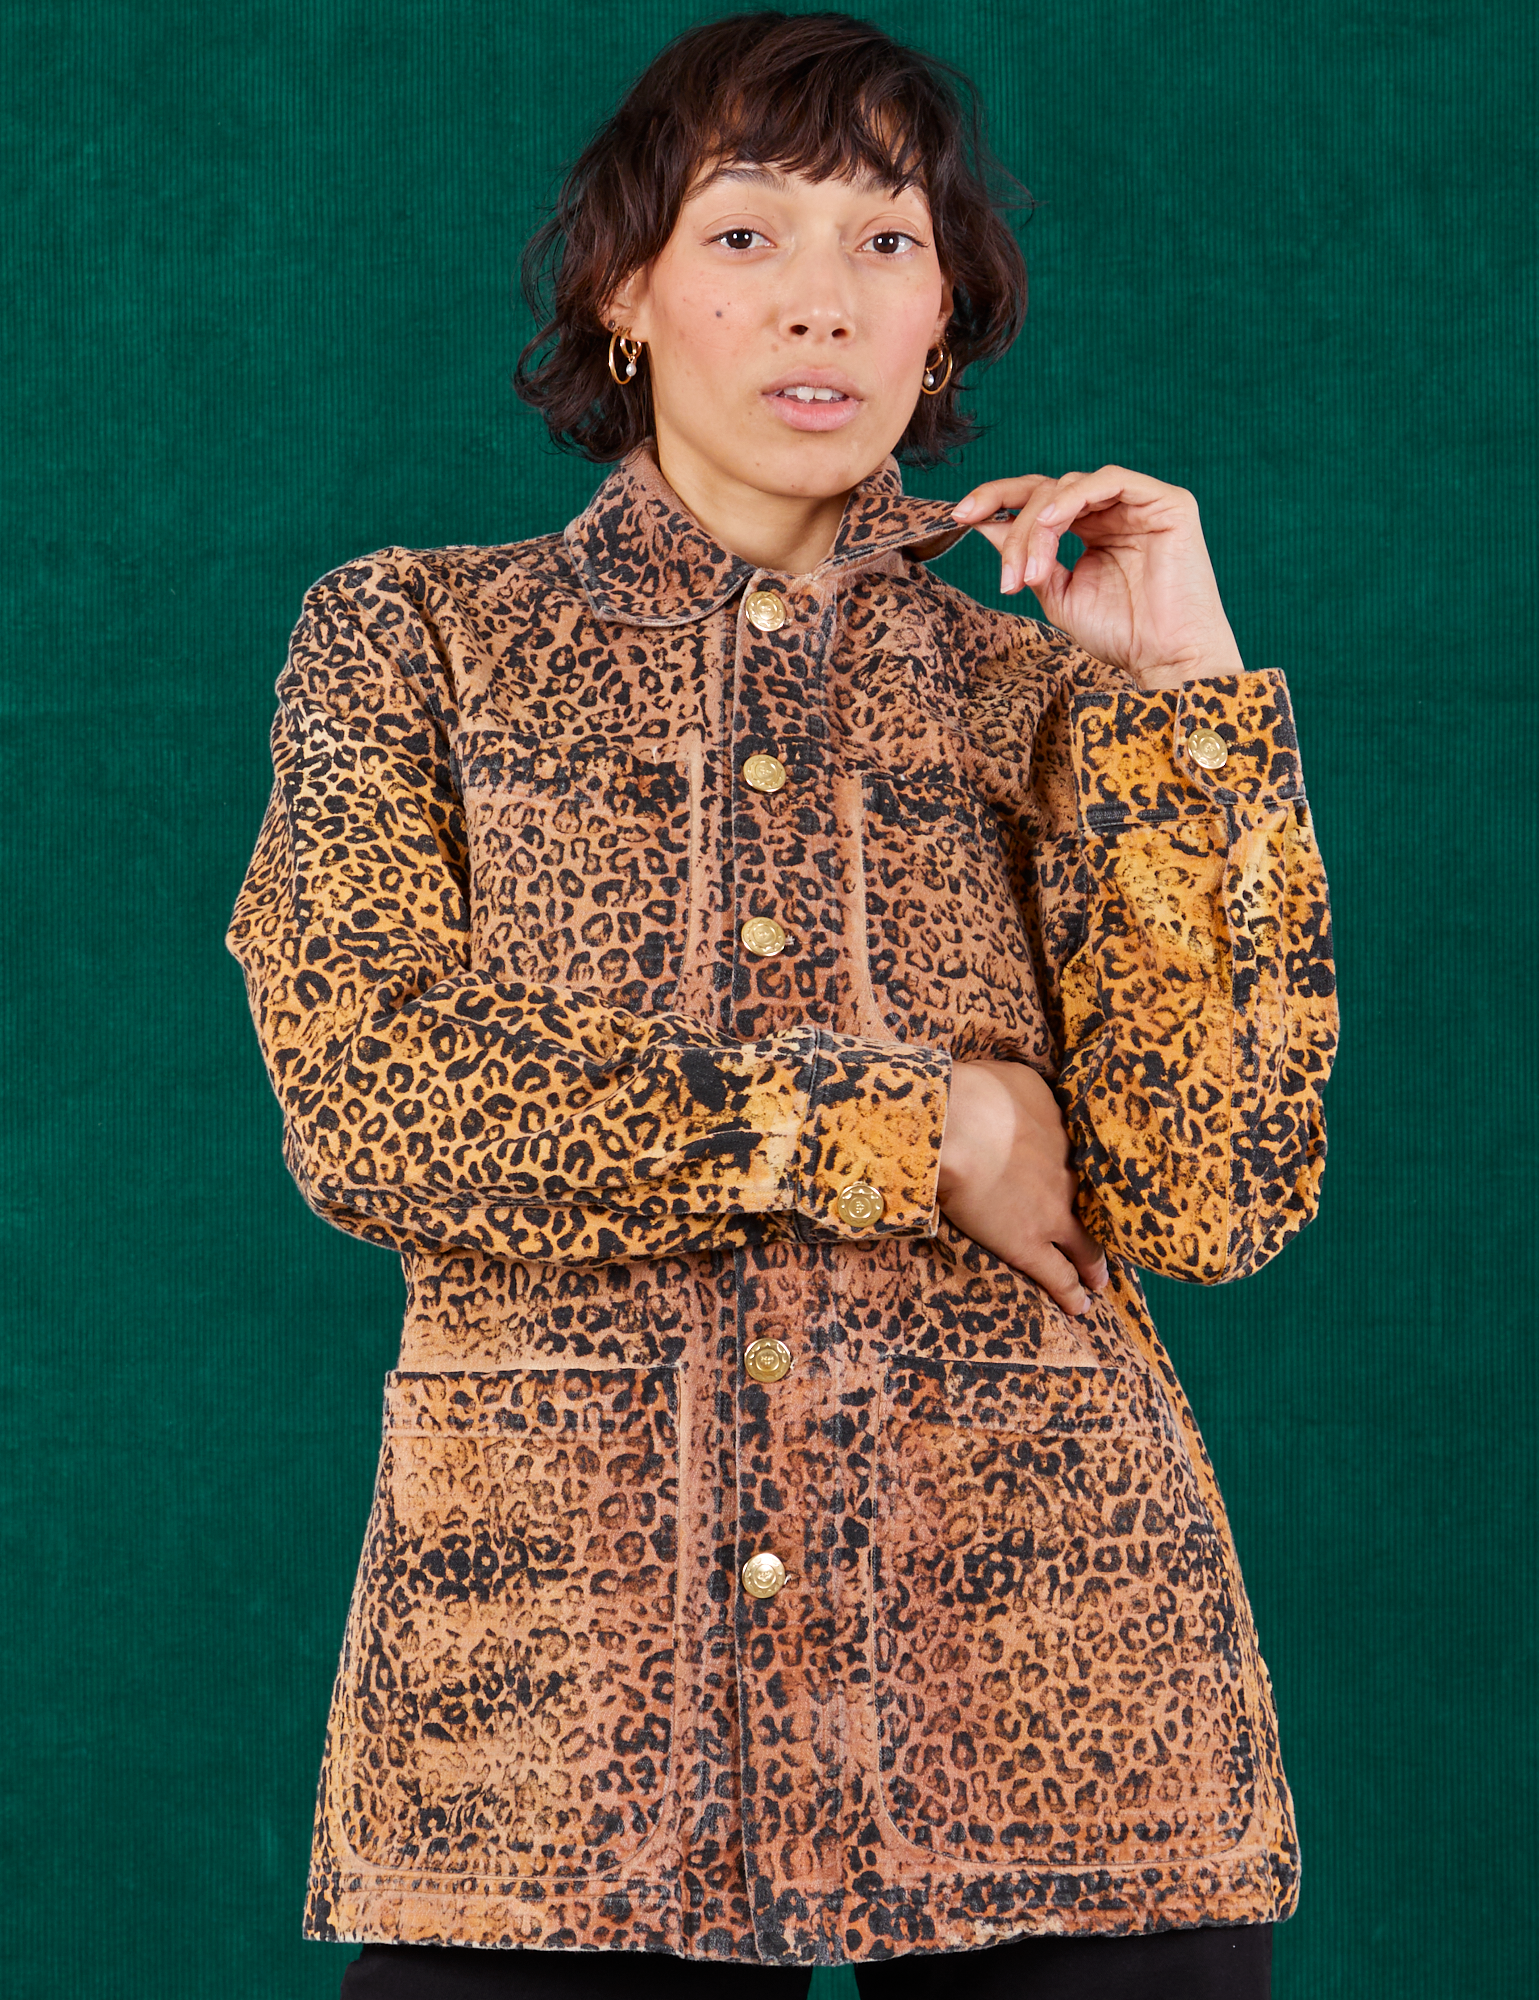 Tiara is wearing a buttoned up Field Coat in Leopard Print